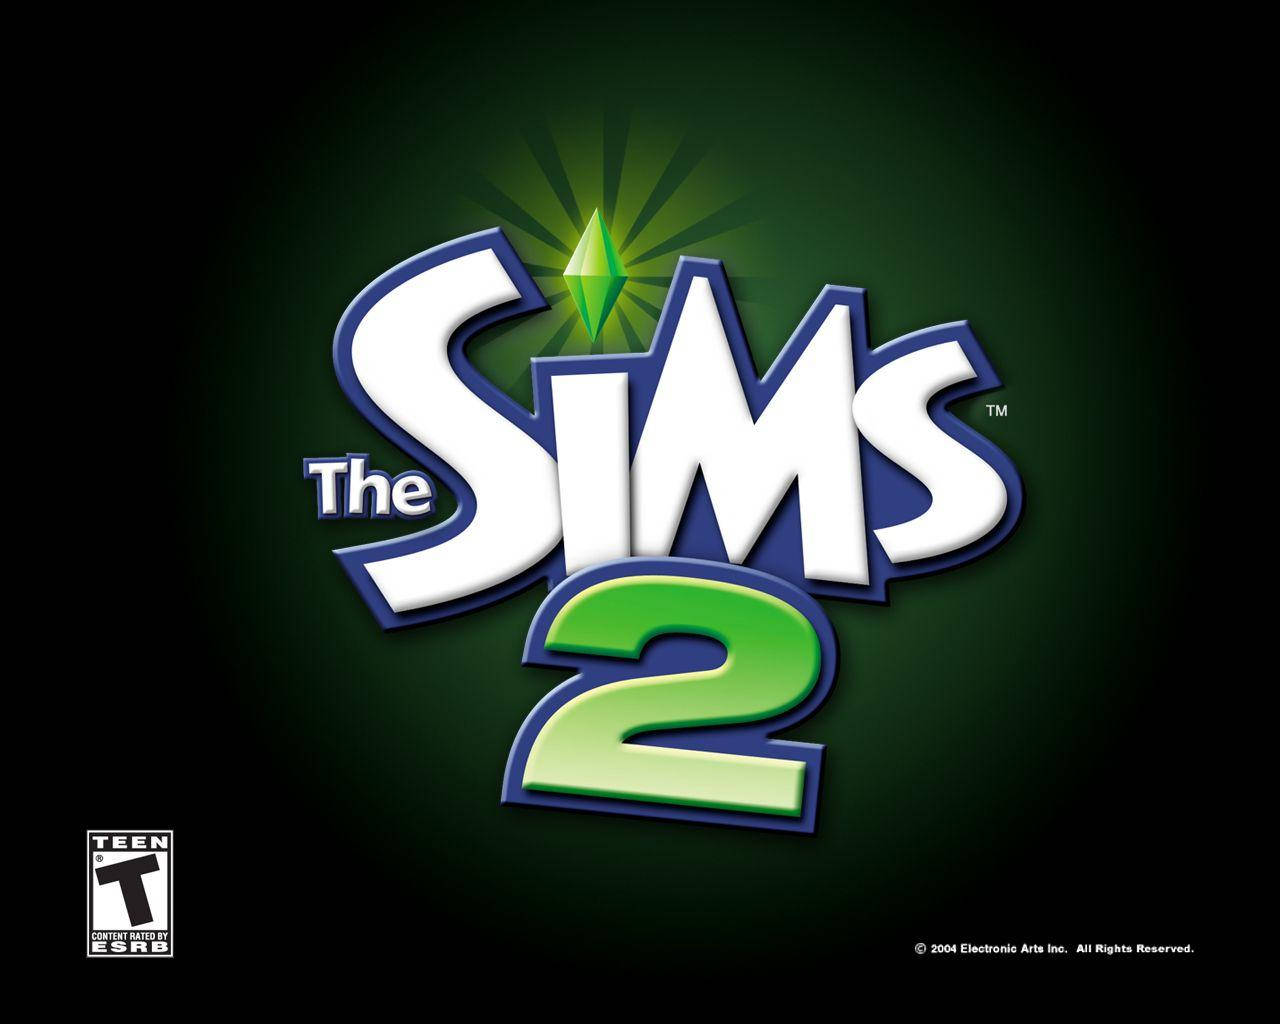 Logoafbildning af Sims 2 Wallpaper